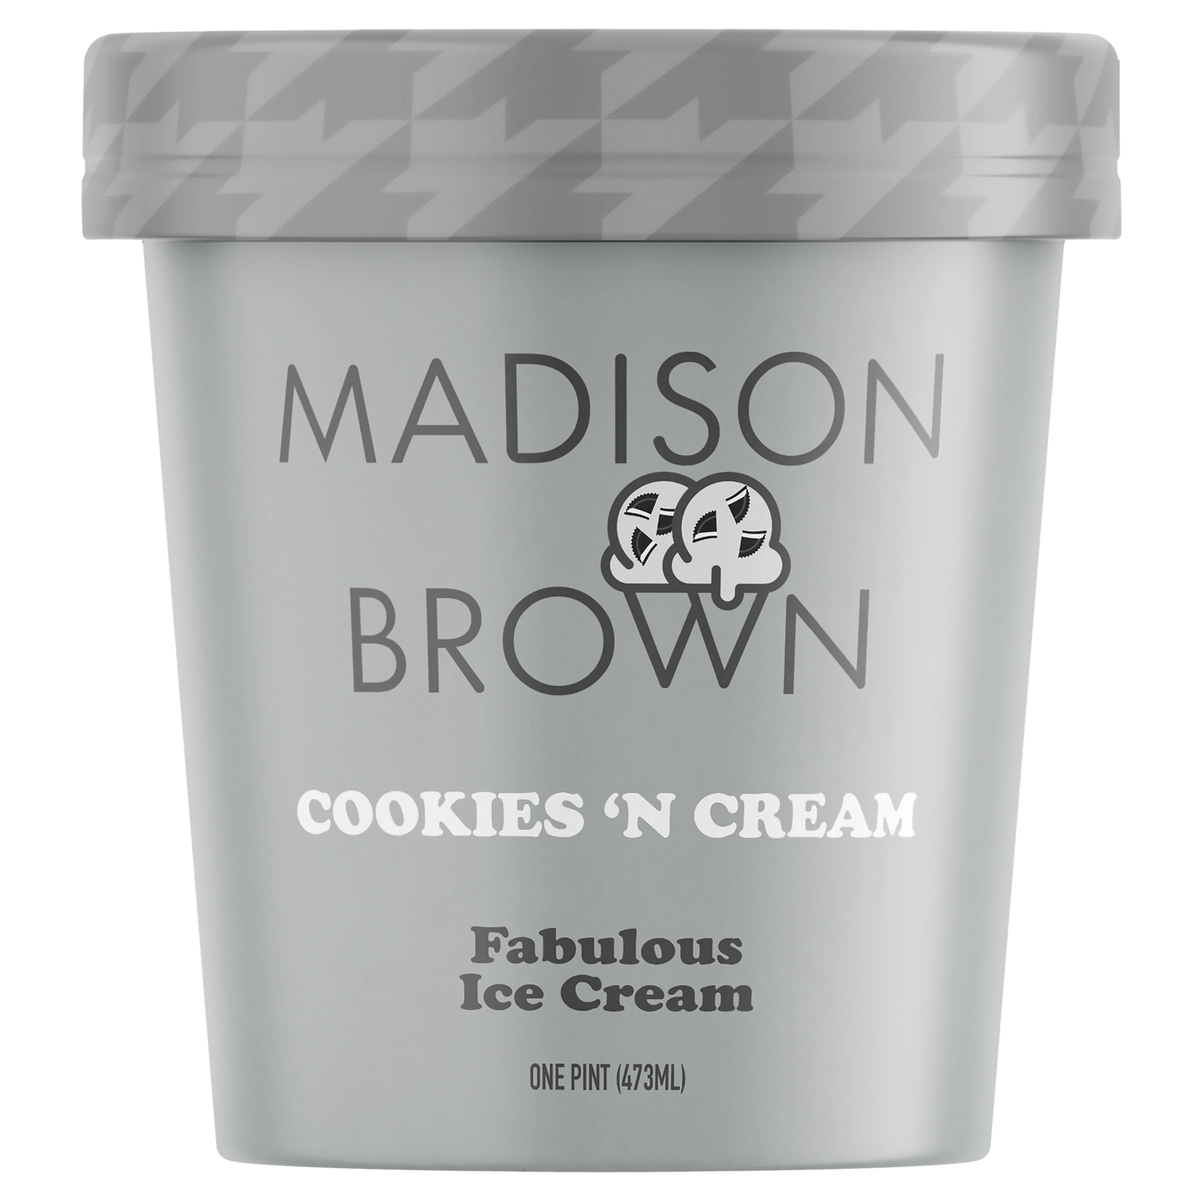 Madison Brown Fabulous Ice Cream : Cookies N Cream